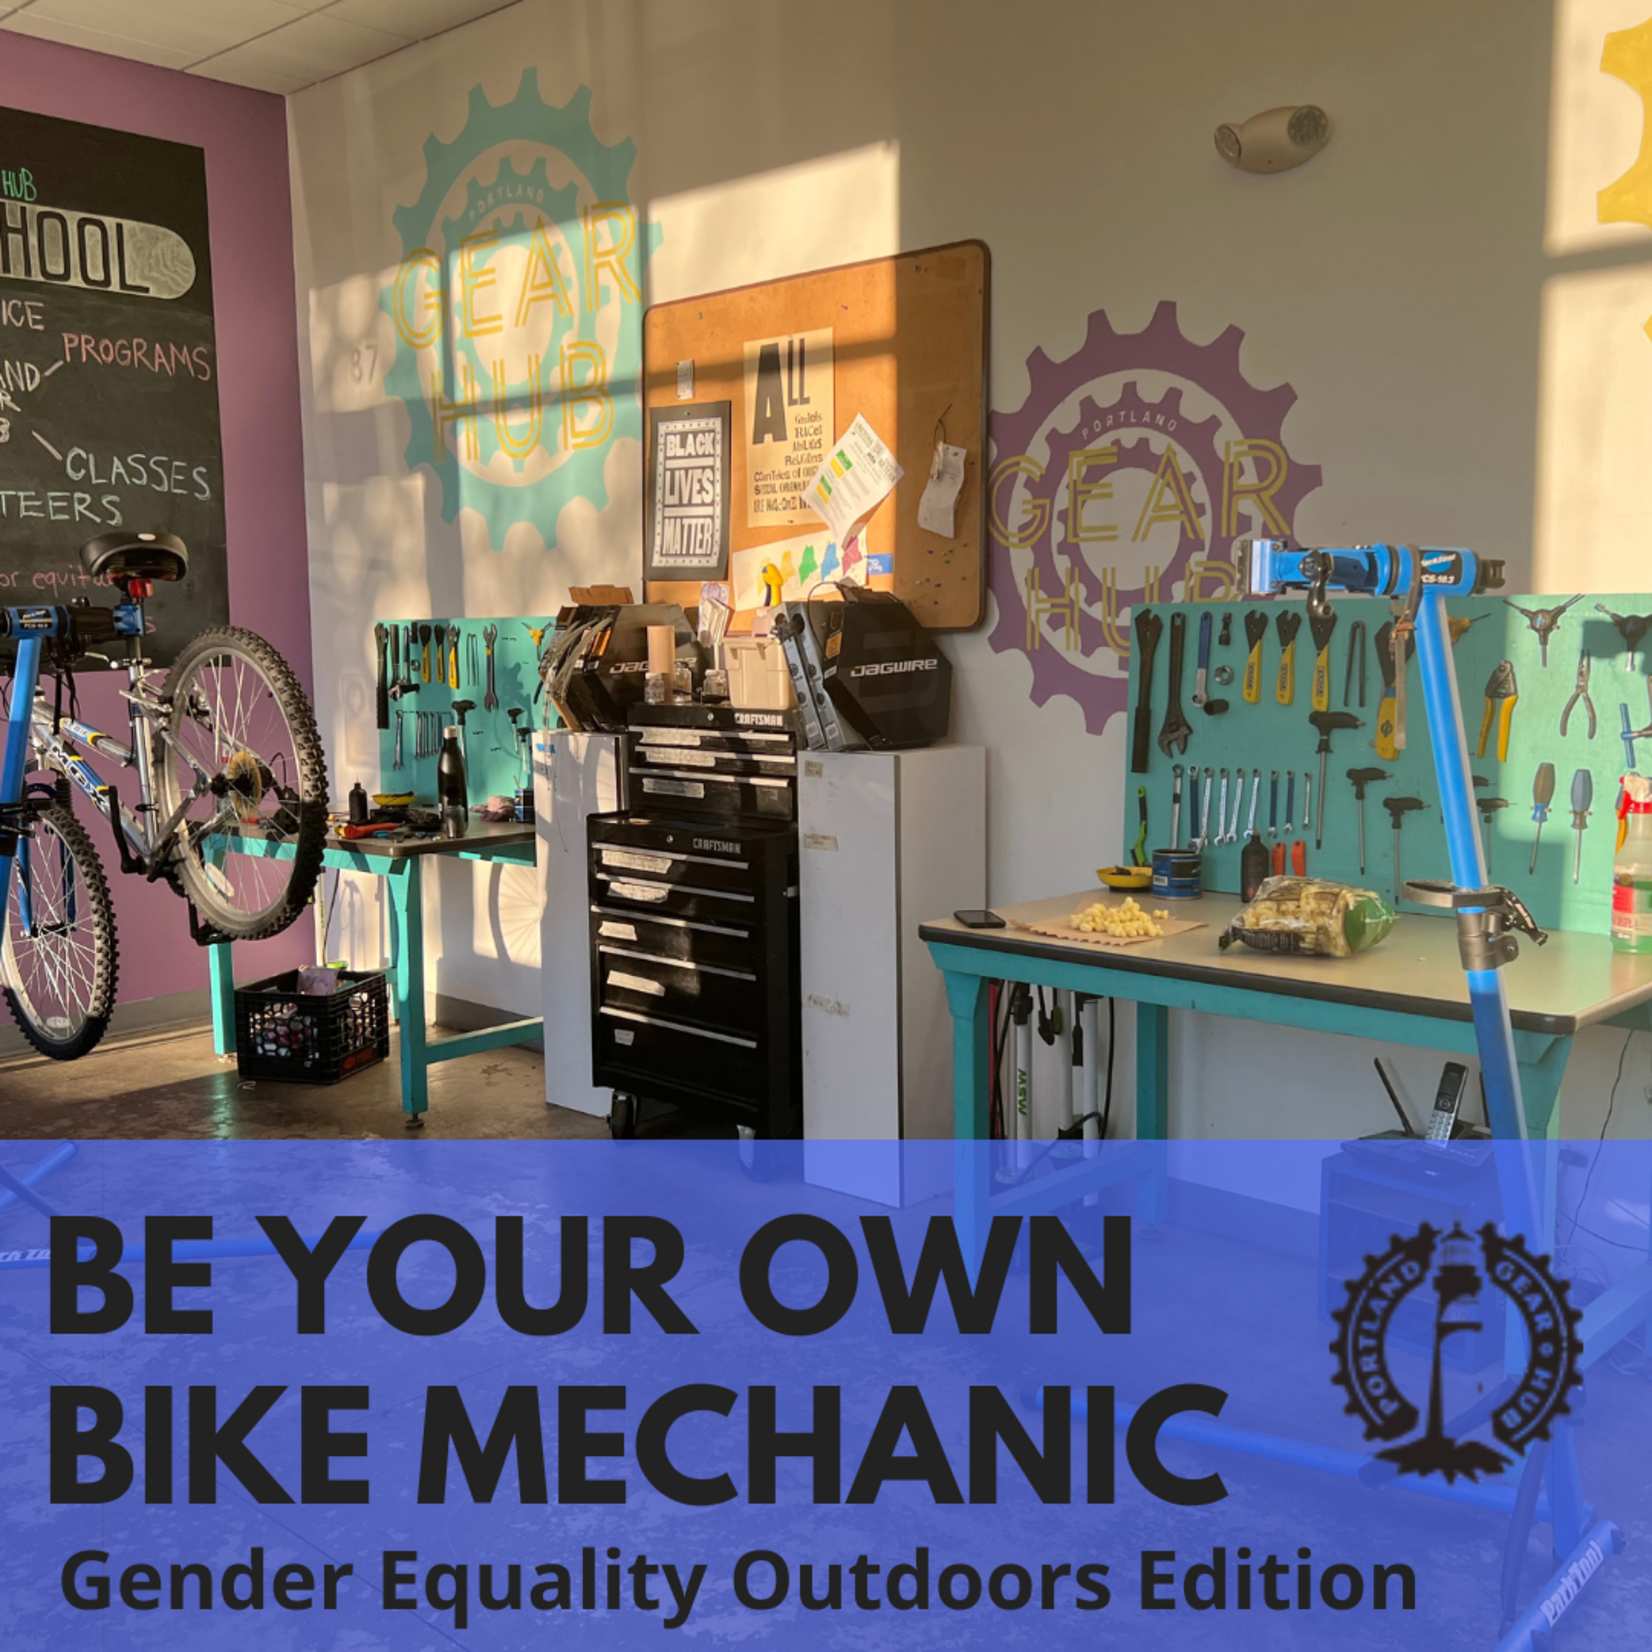 Portland Gear Hub Be Your Own Bike Mechanic *GEO Edition* Thursdays, April 27 - June 8, 3:30 - 5:30 PM (skip May 18th)